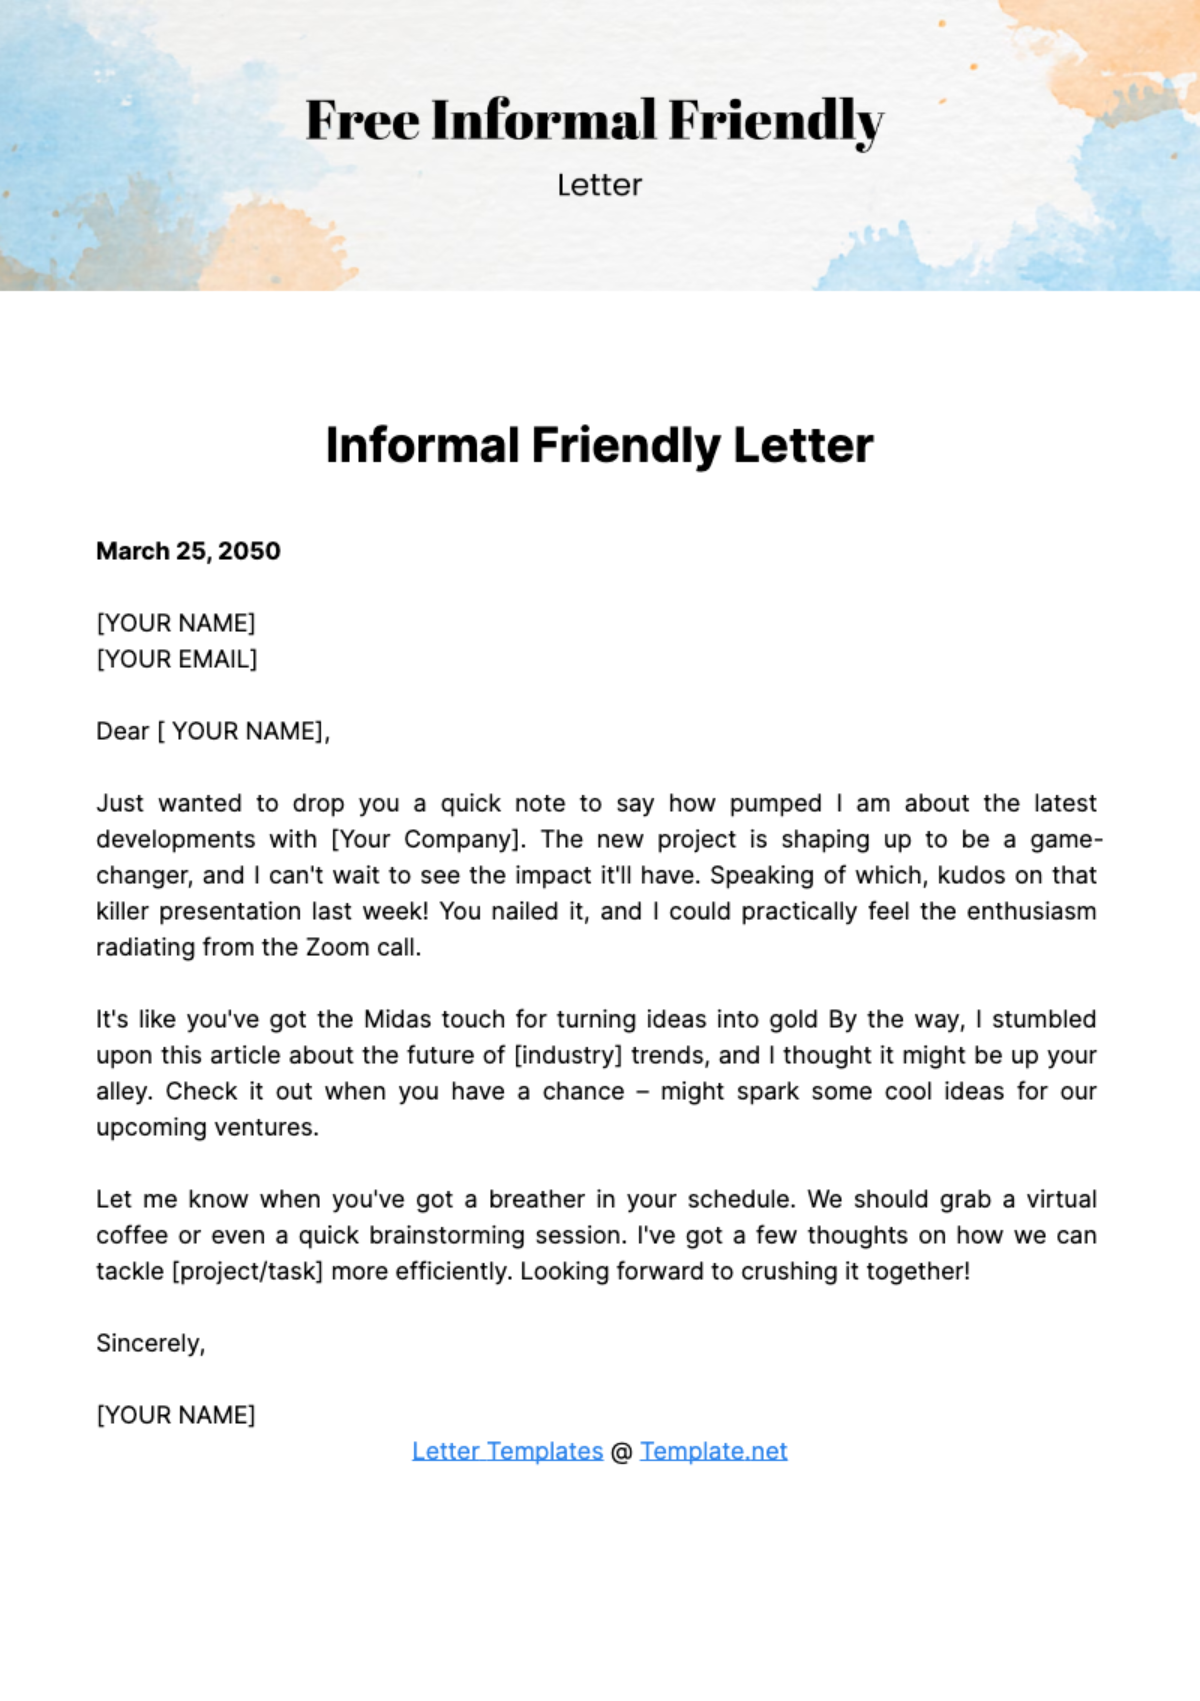 Informal Friendly Letter Template